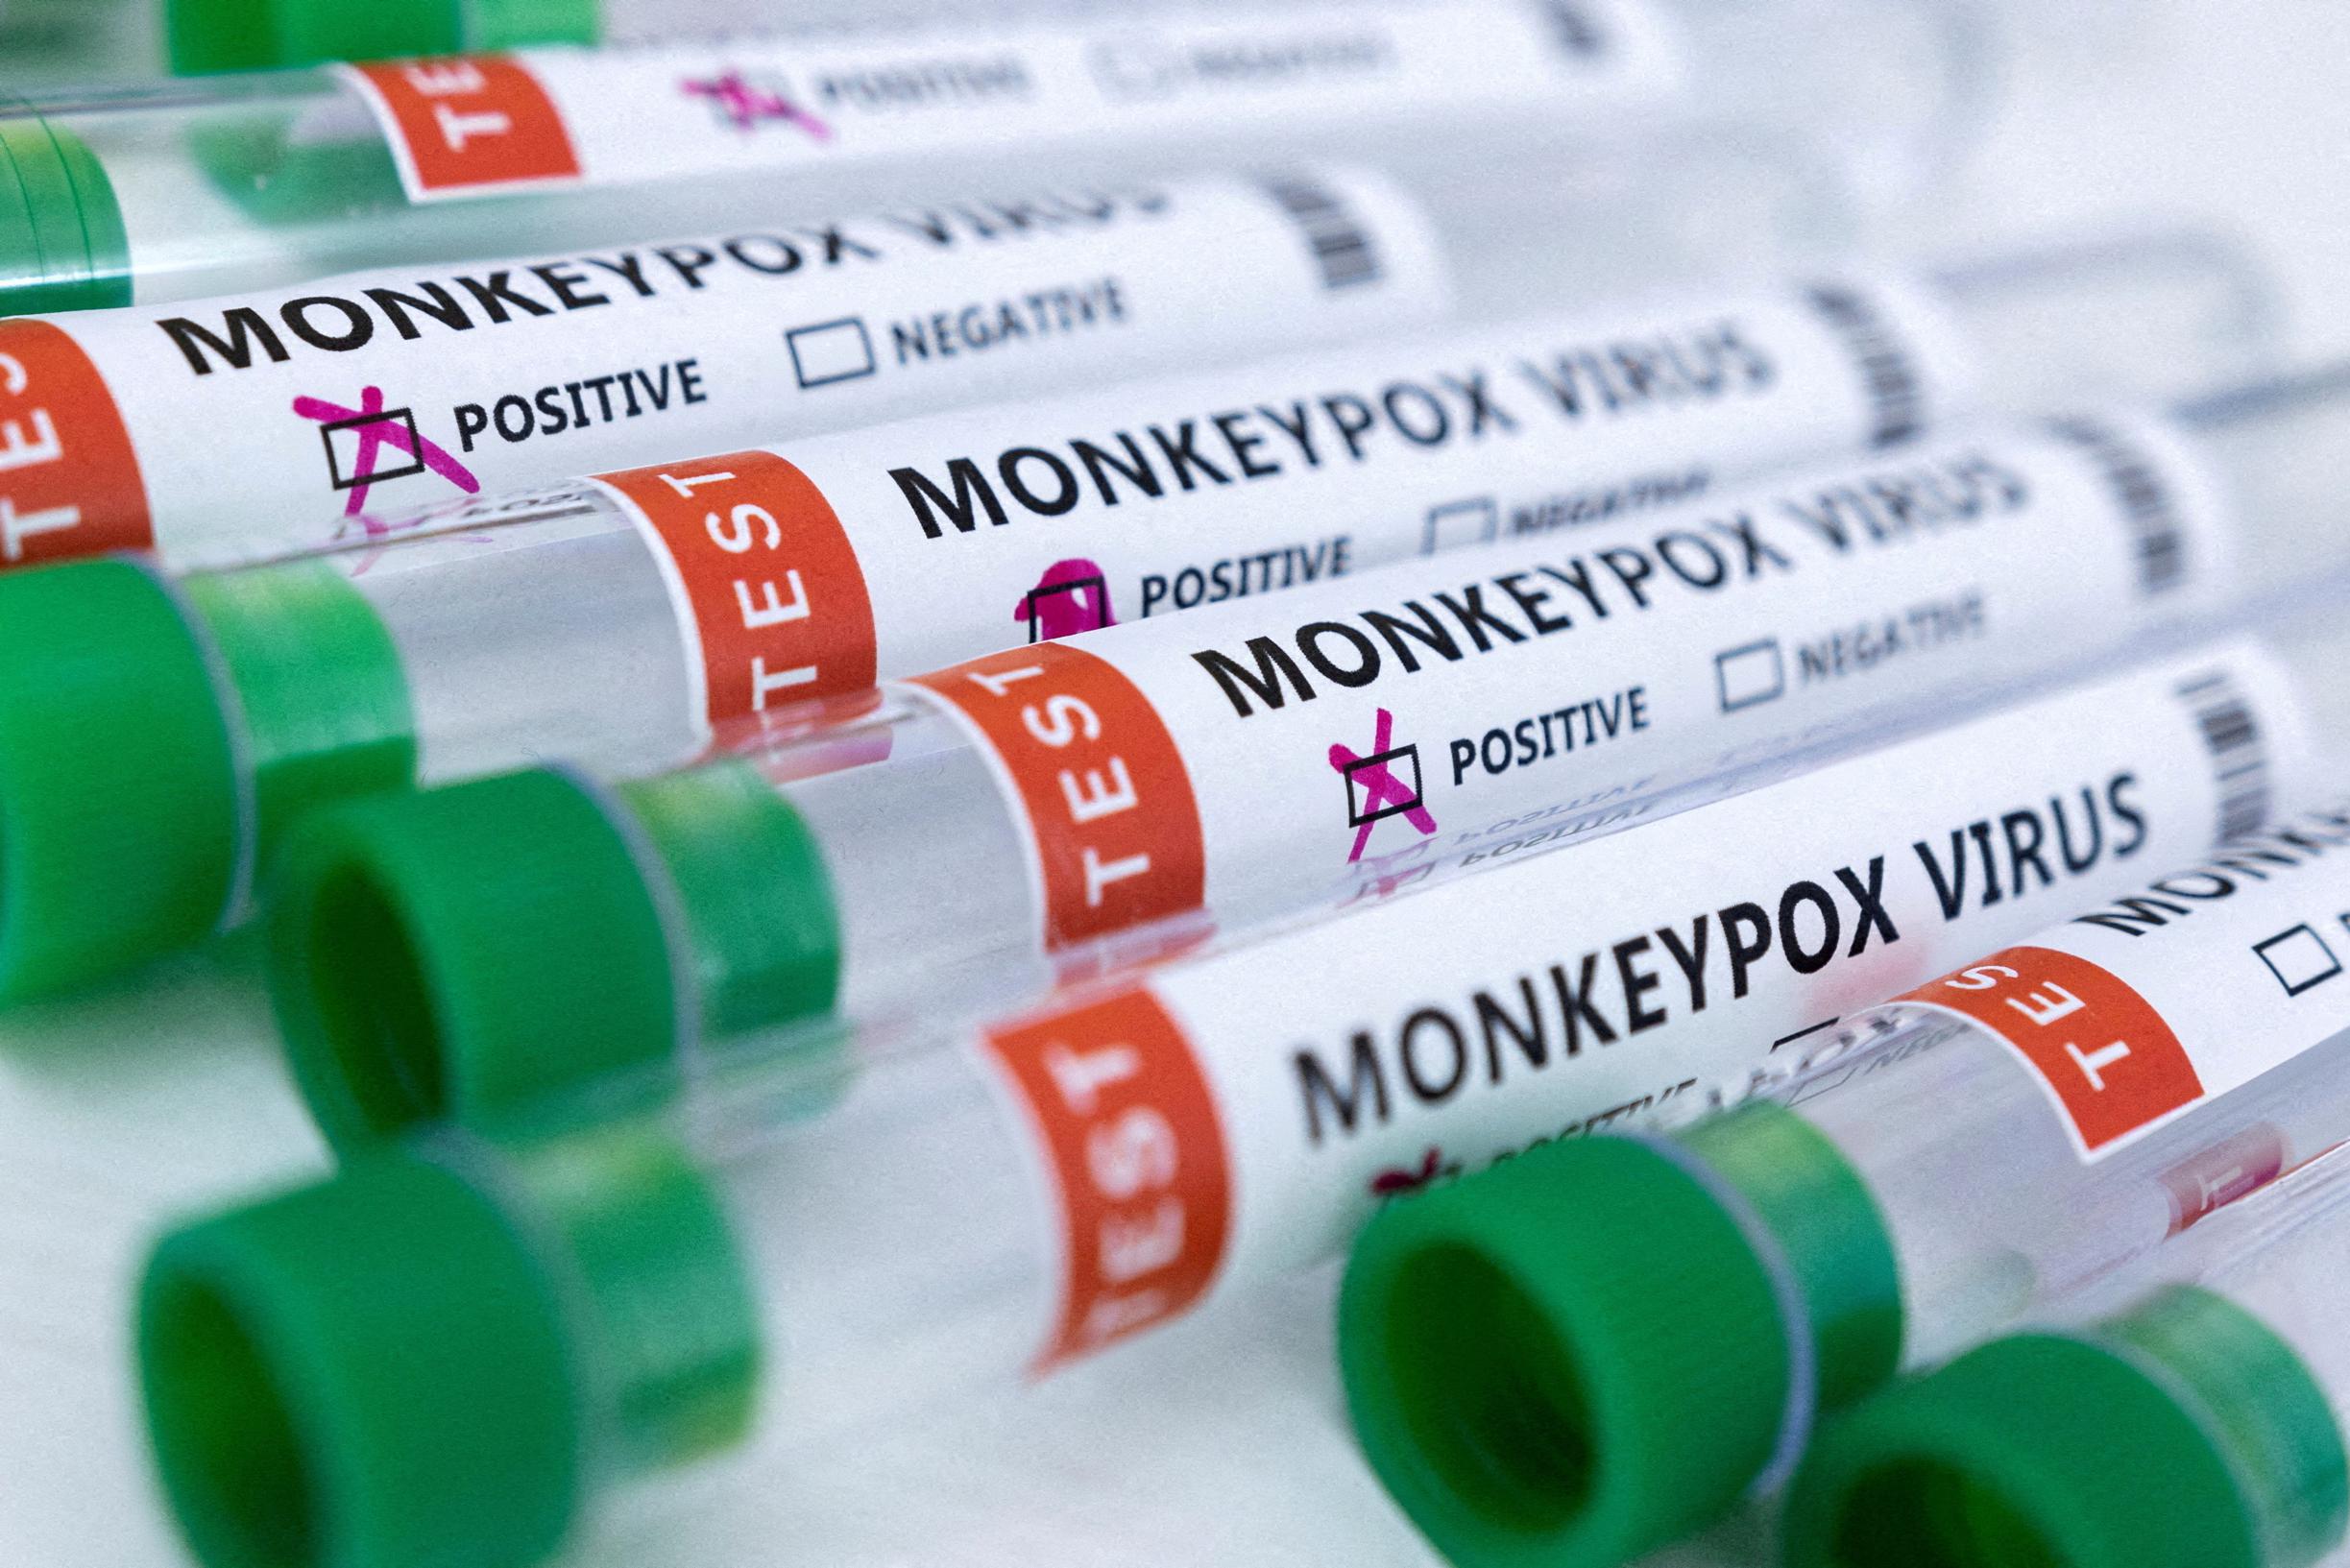 WHO deplores attacks on monkeys in Brazil: Monkeypox not linked to monkey species